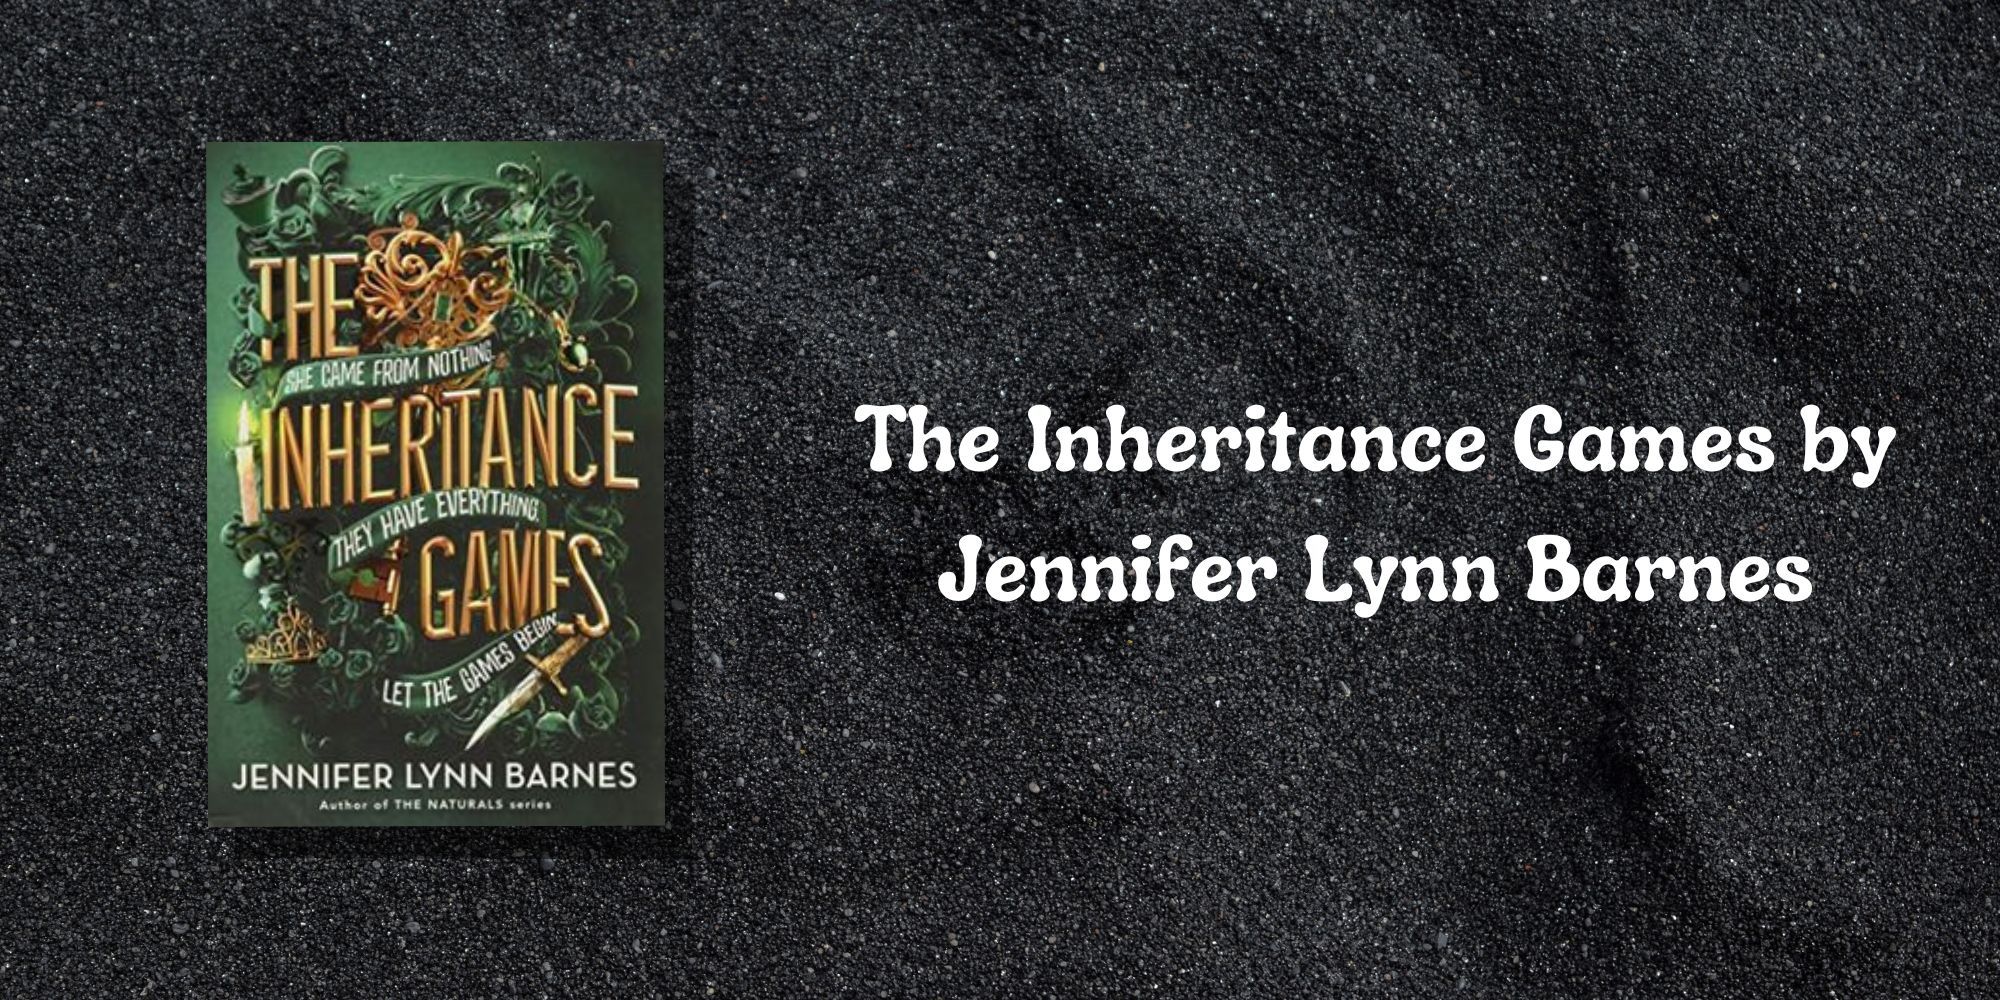 Cover of The Inheritance Games by Jennifer Lynn Barnes